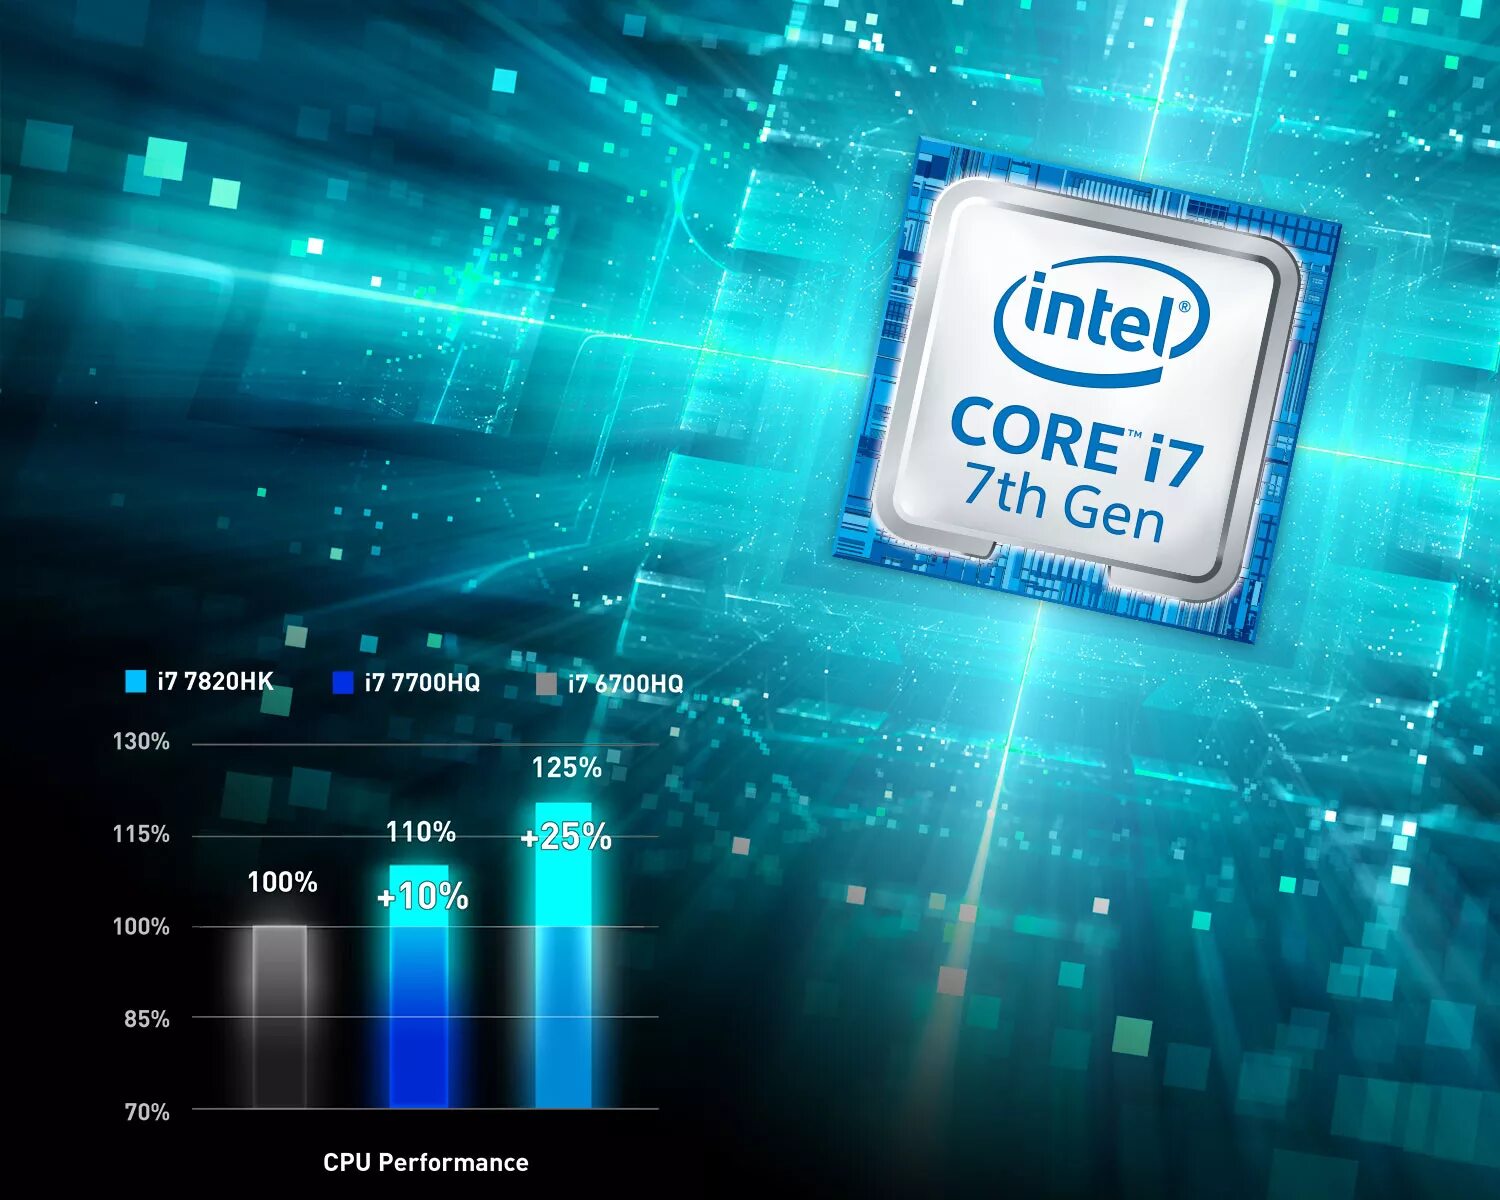 Интел кс. Процессор Intel Core i7. Intel Core i7 7 7th Gen. Intel Core i7 8th Gen. Intel Core i7-8750h.